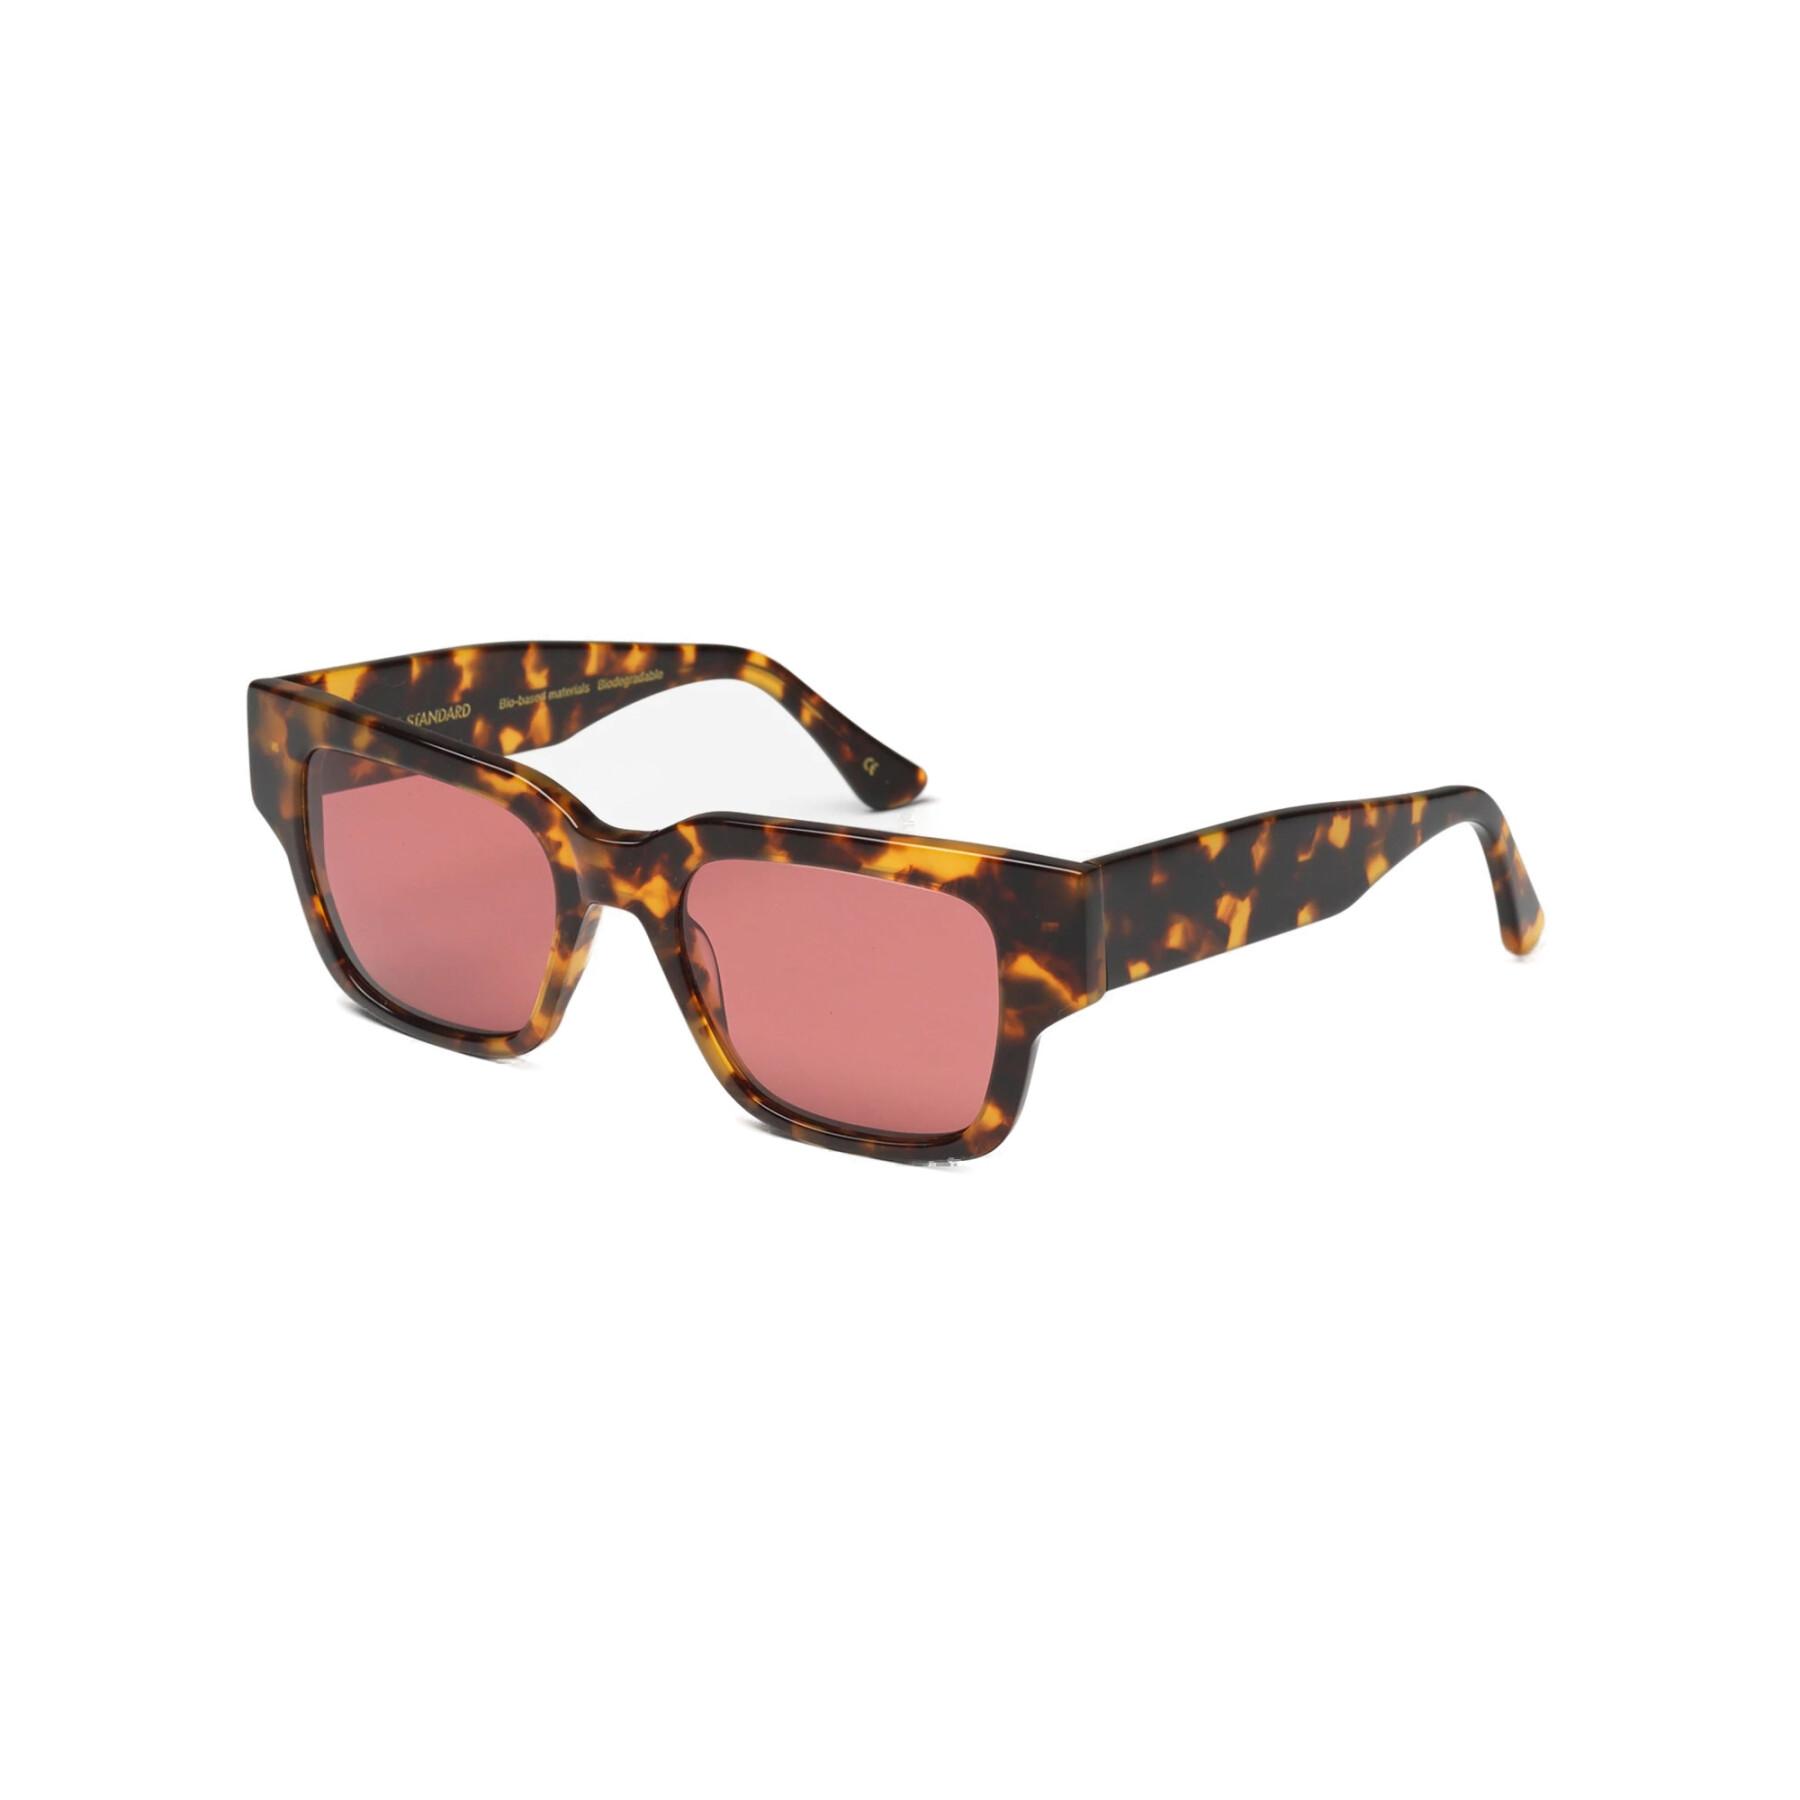 Sunglasses Colorful Standard 02 classic havana/dark pink